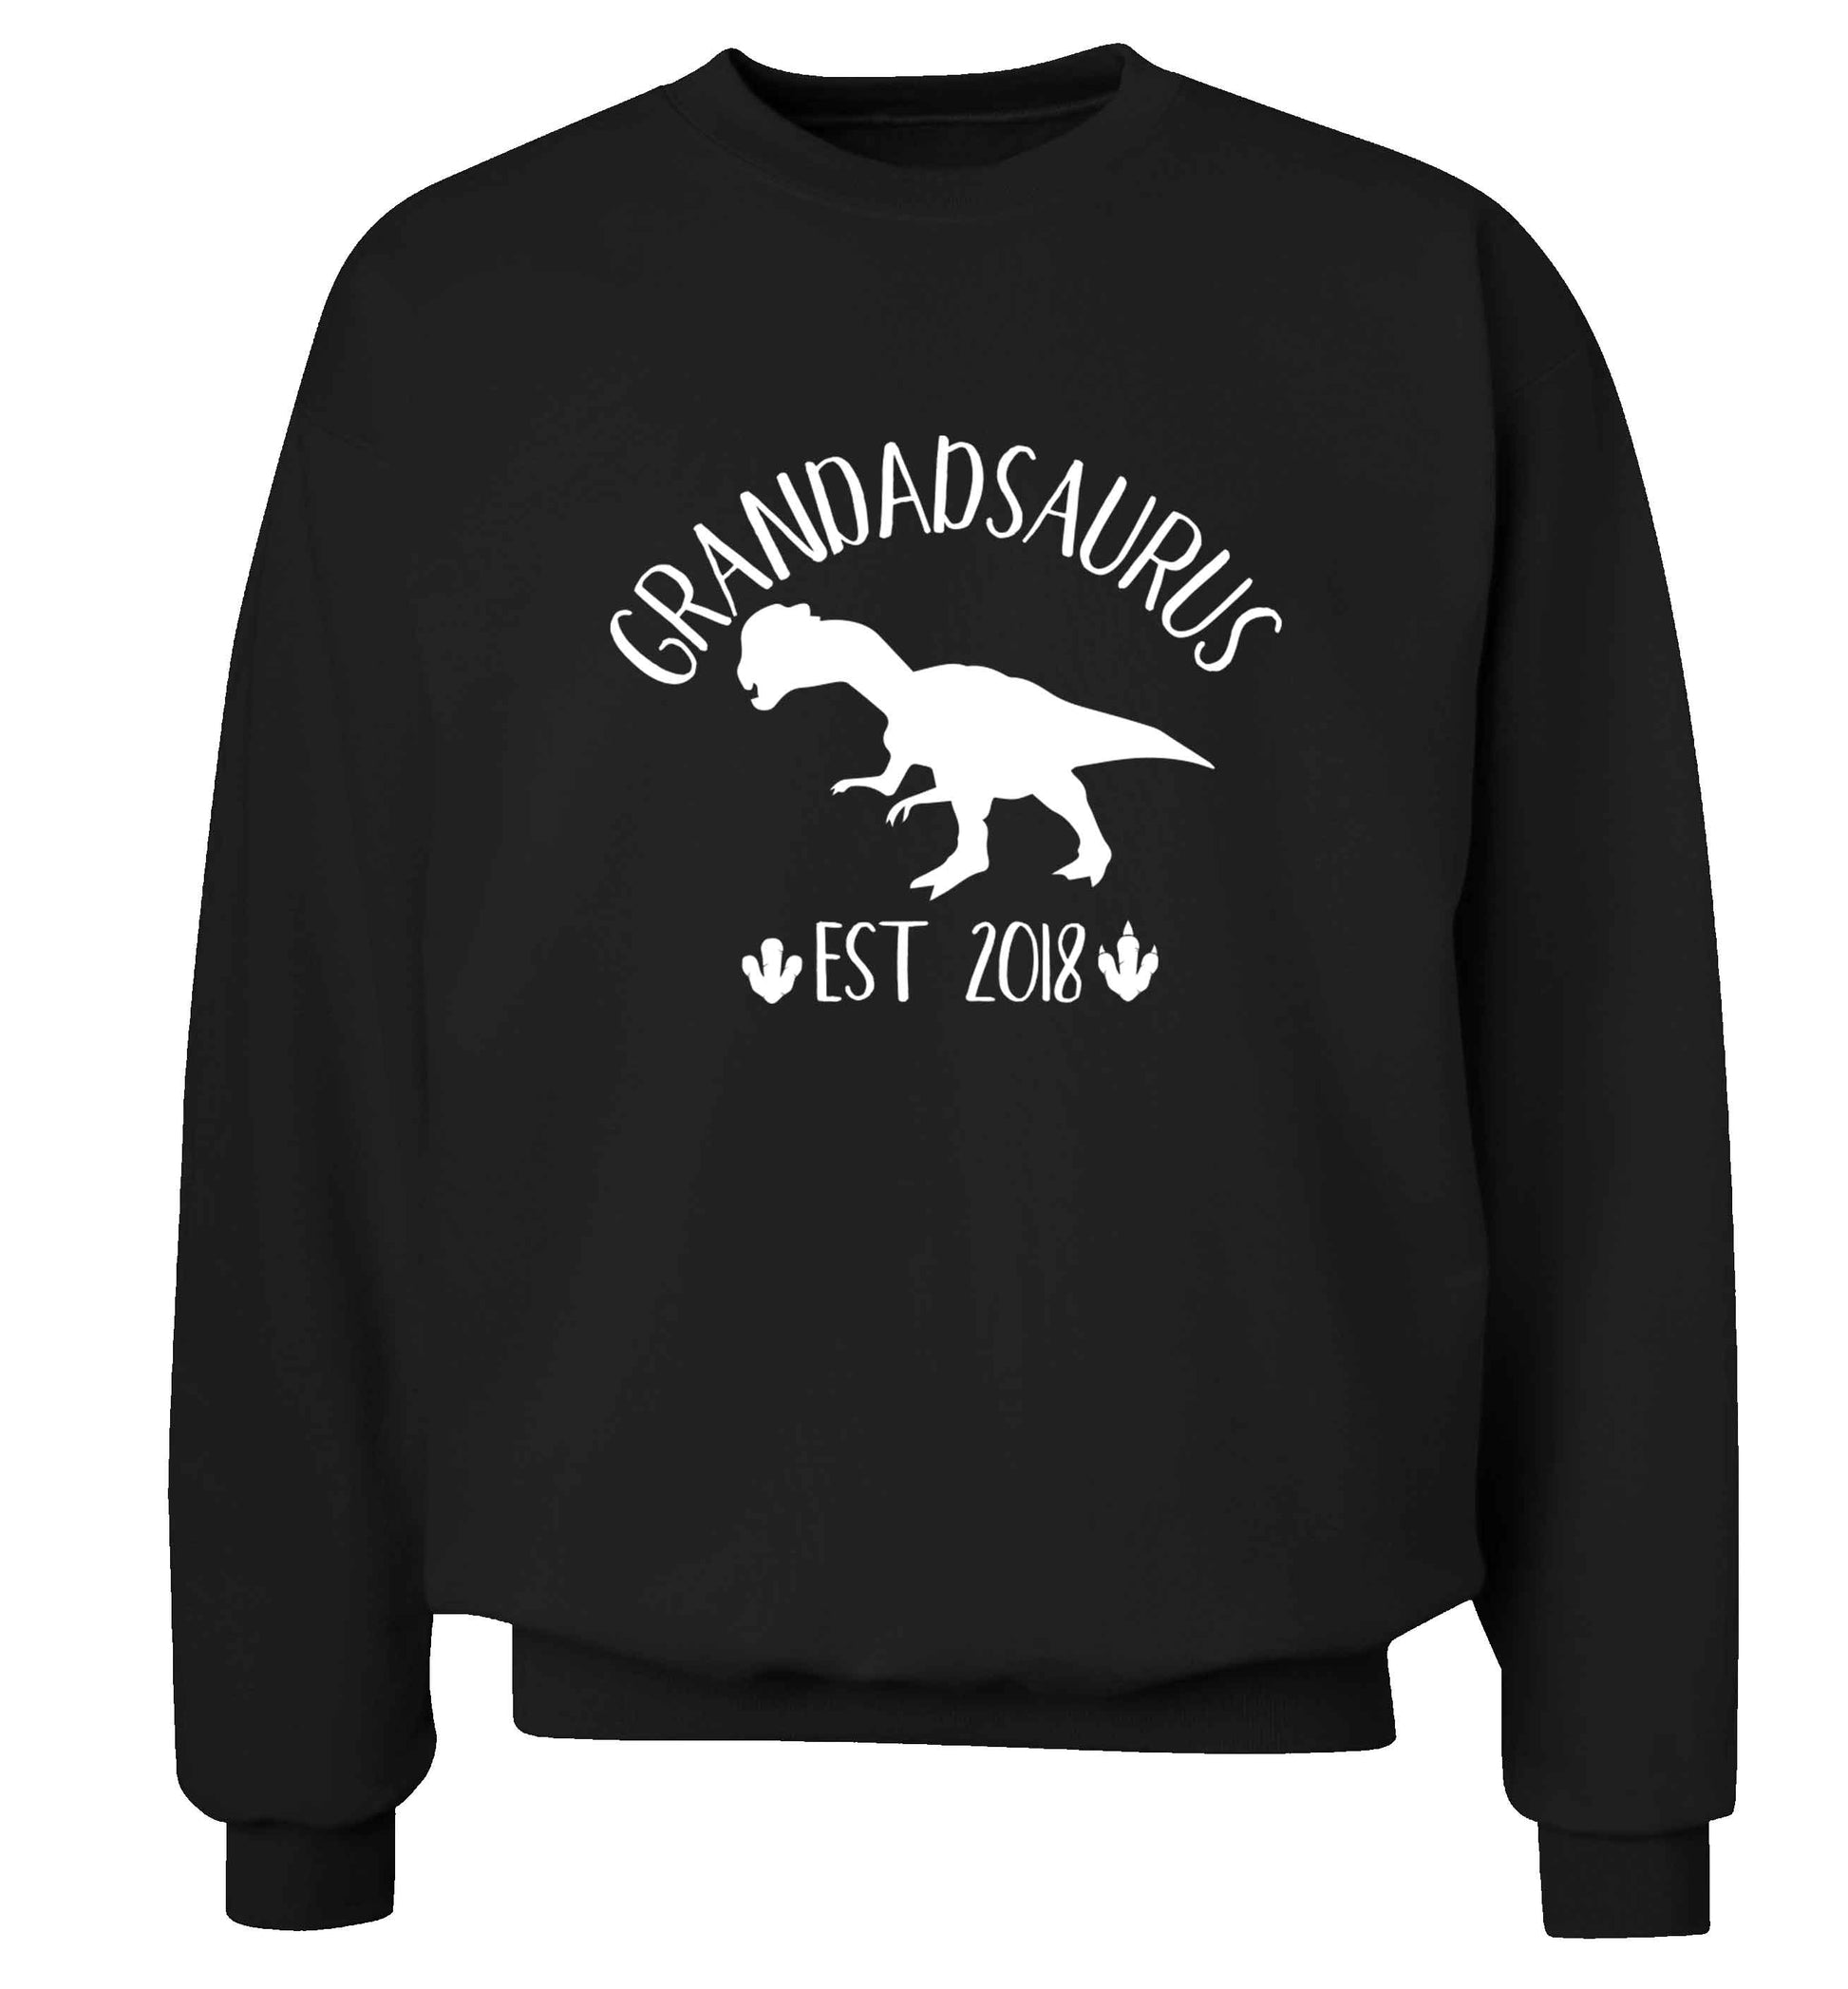 Personalised grandadsaurus since (custom date) Adult's unisex black Sweater 2XL